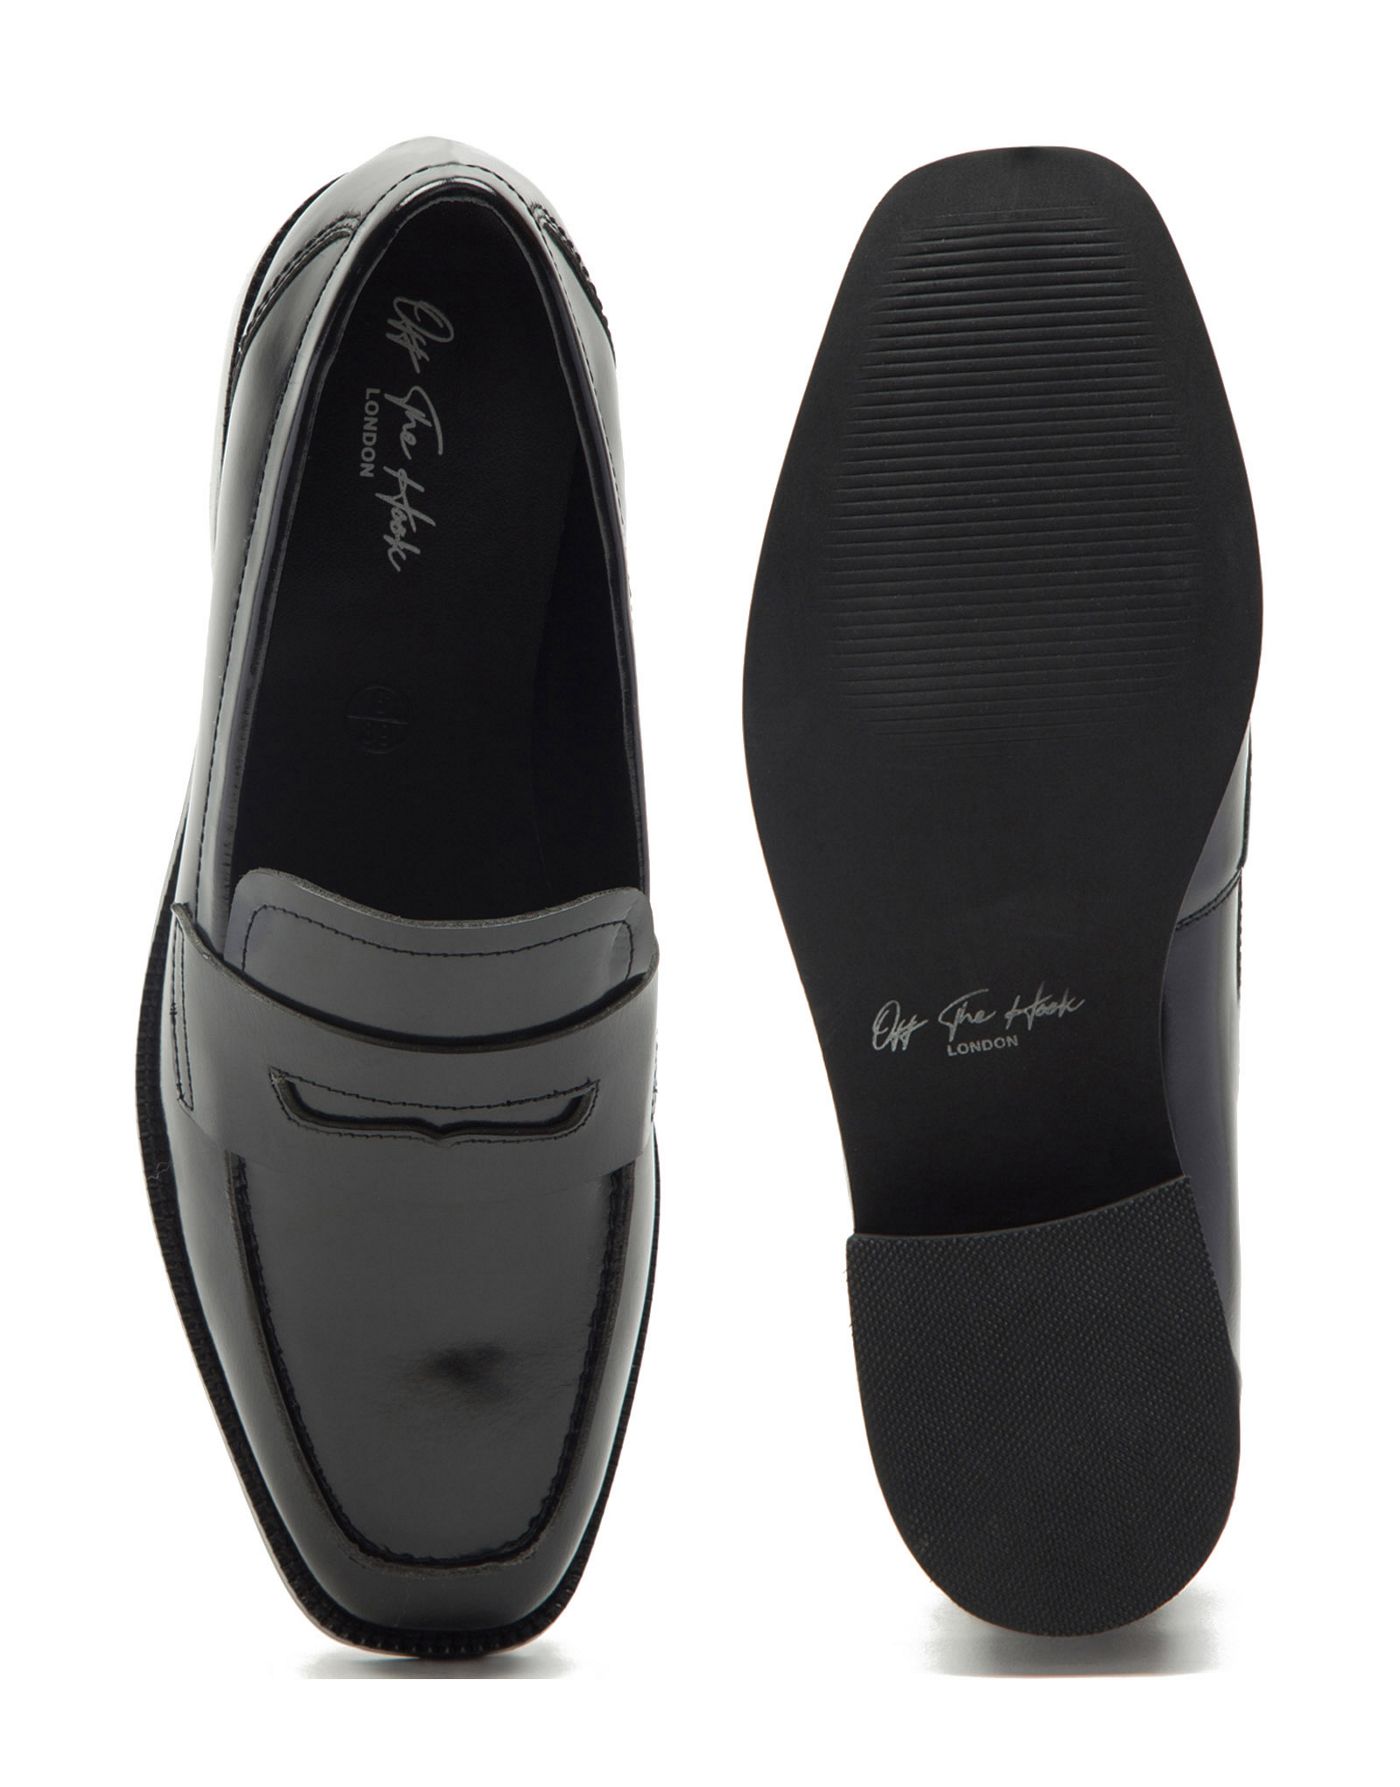 Off The Hook 'kew' slip on loafer leather shoe in true black